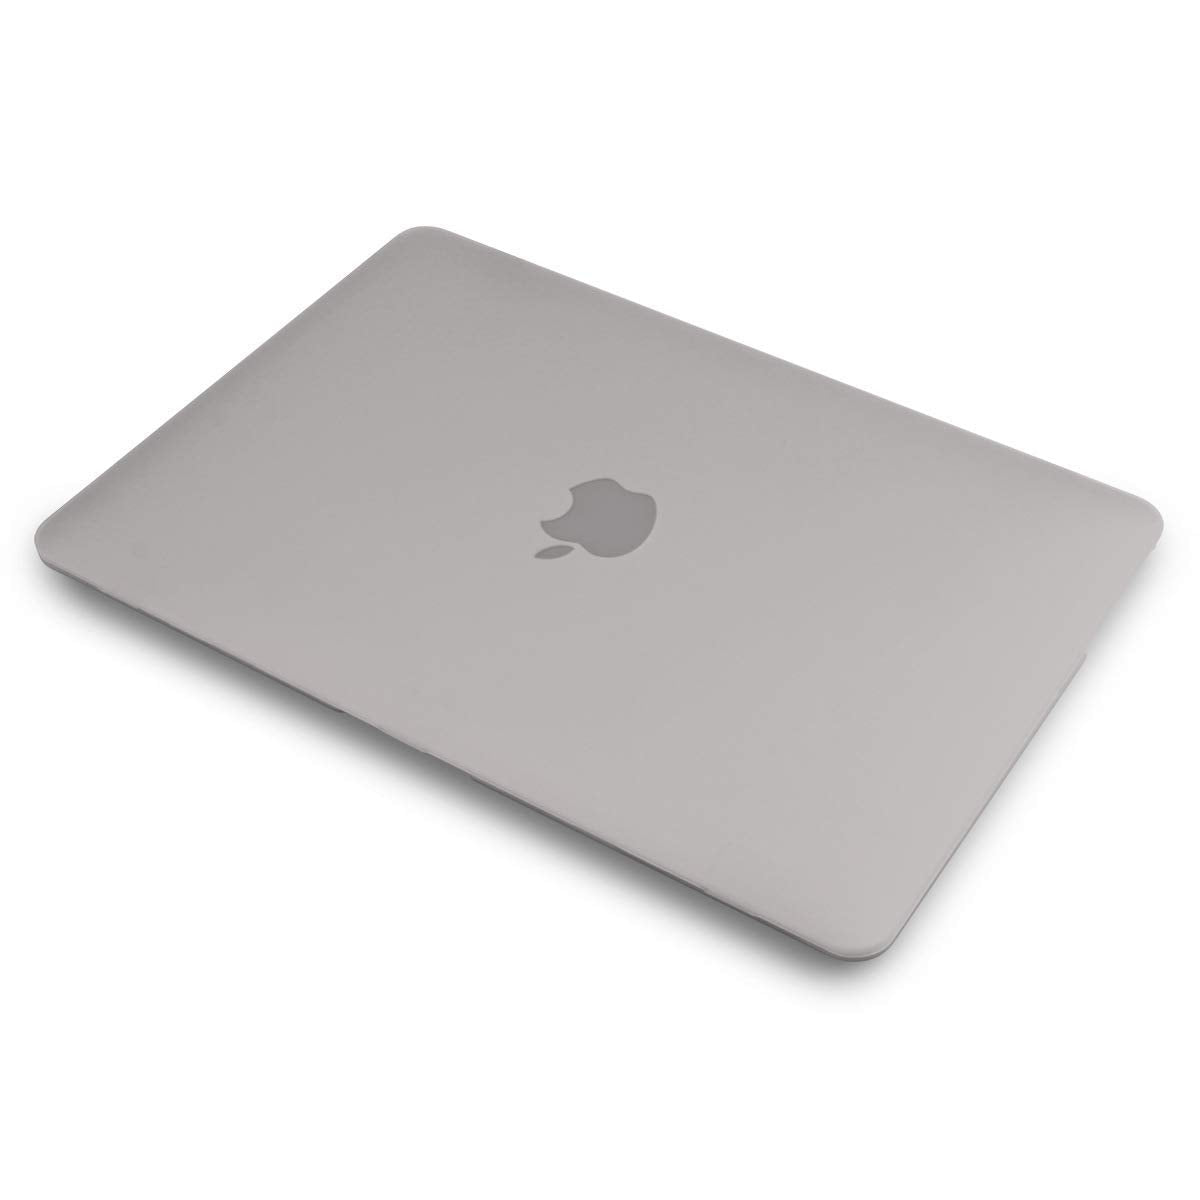 Coconut Hardcase für MacBook Air 13,3" (2020/2019/2018)